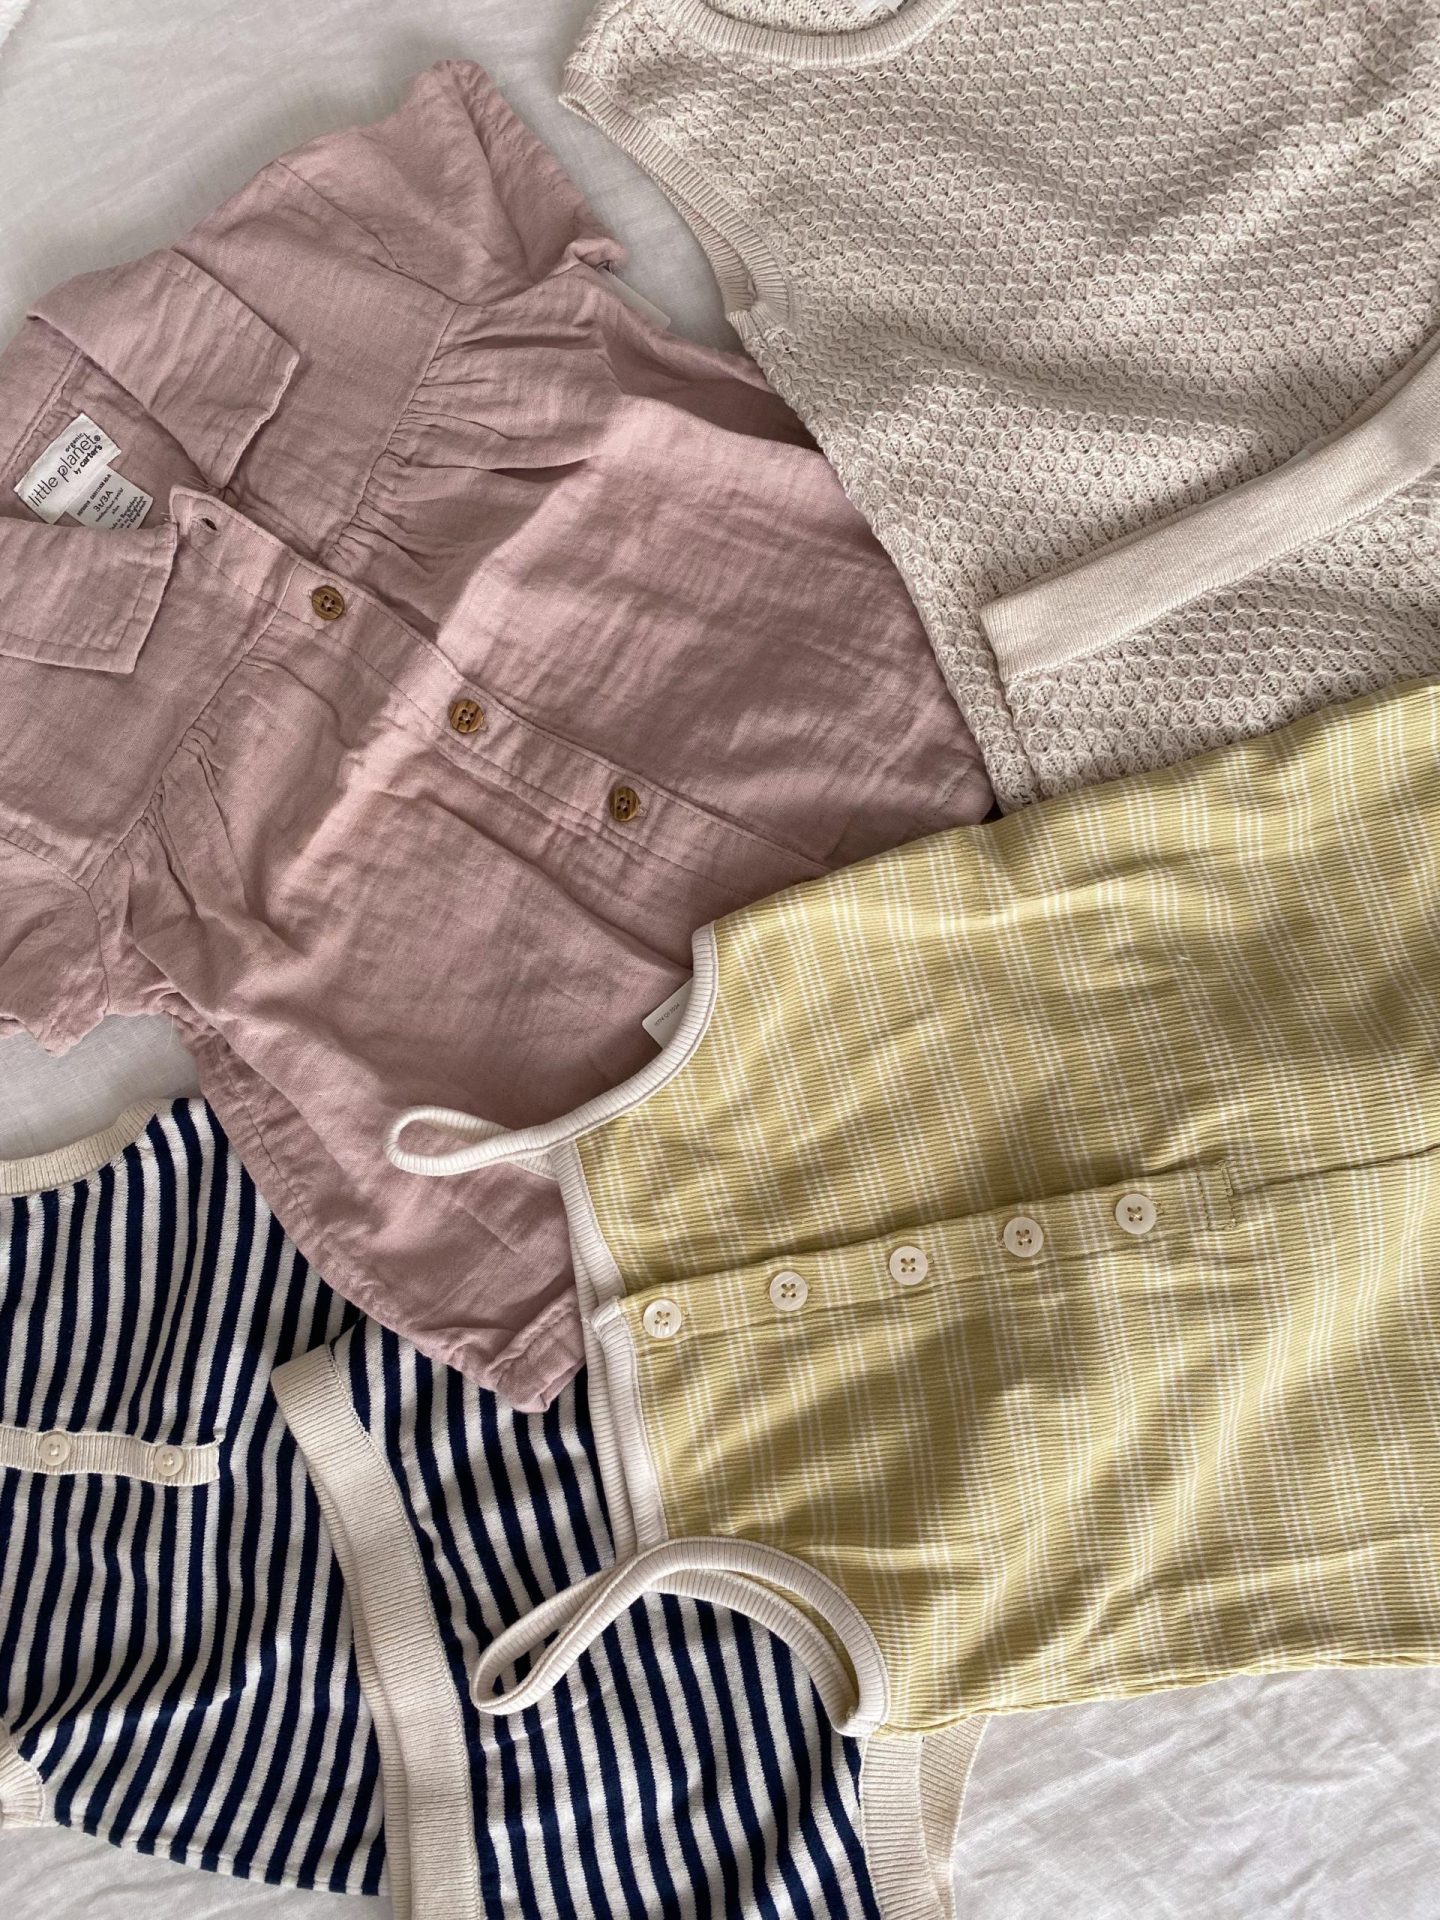 My Spring/Summer Baby & Toddler Girl Clothing Picks